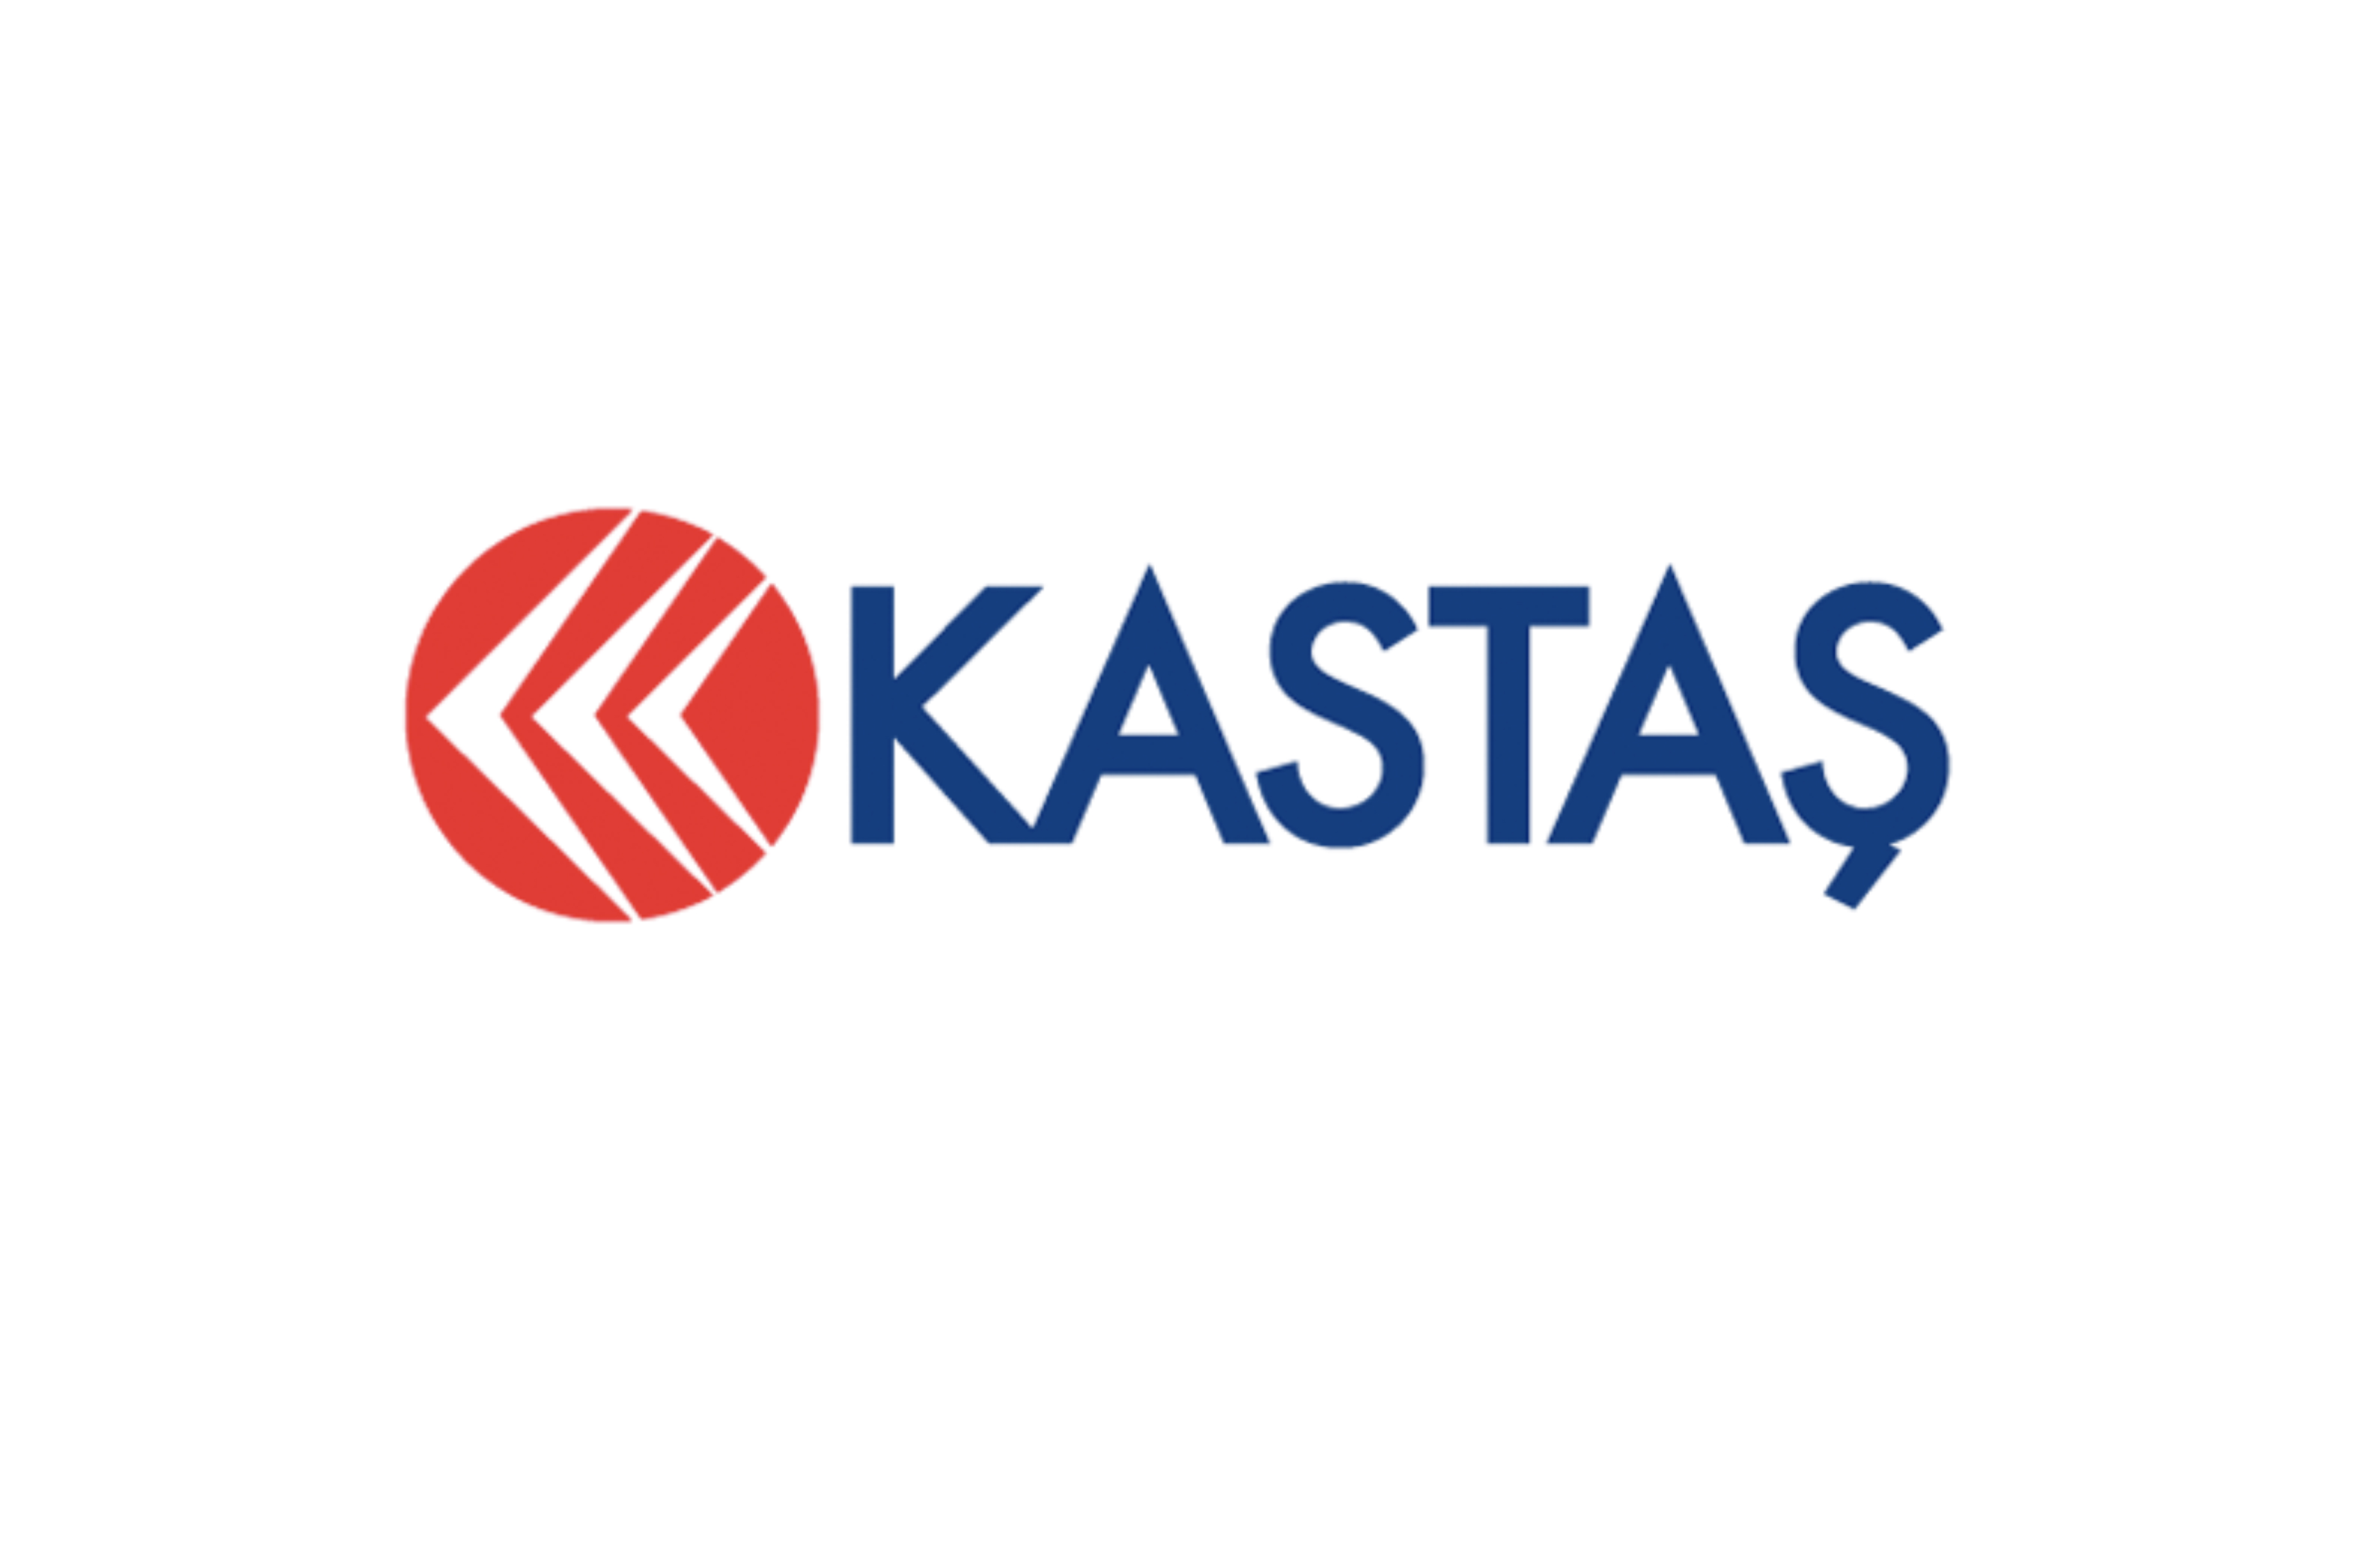 The brands Kastas